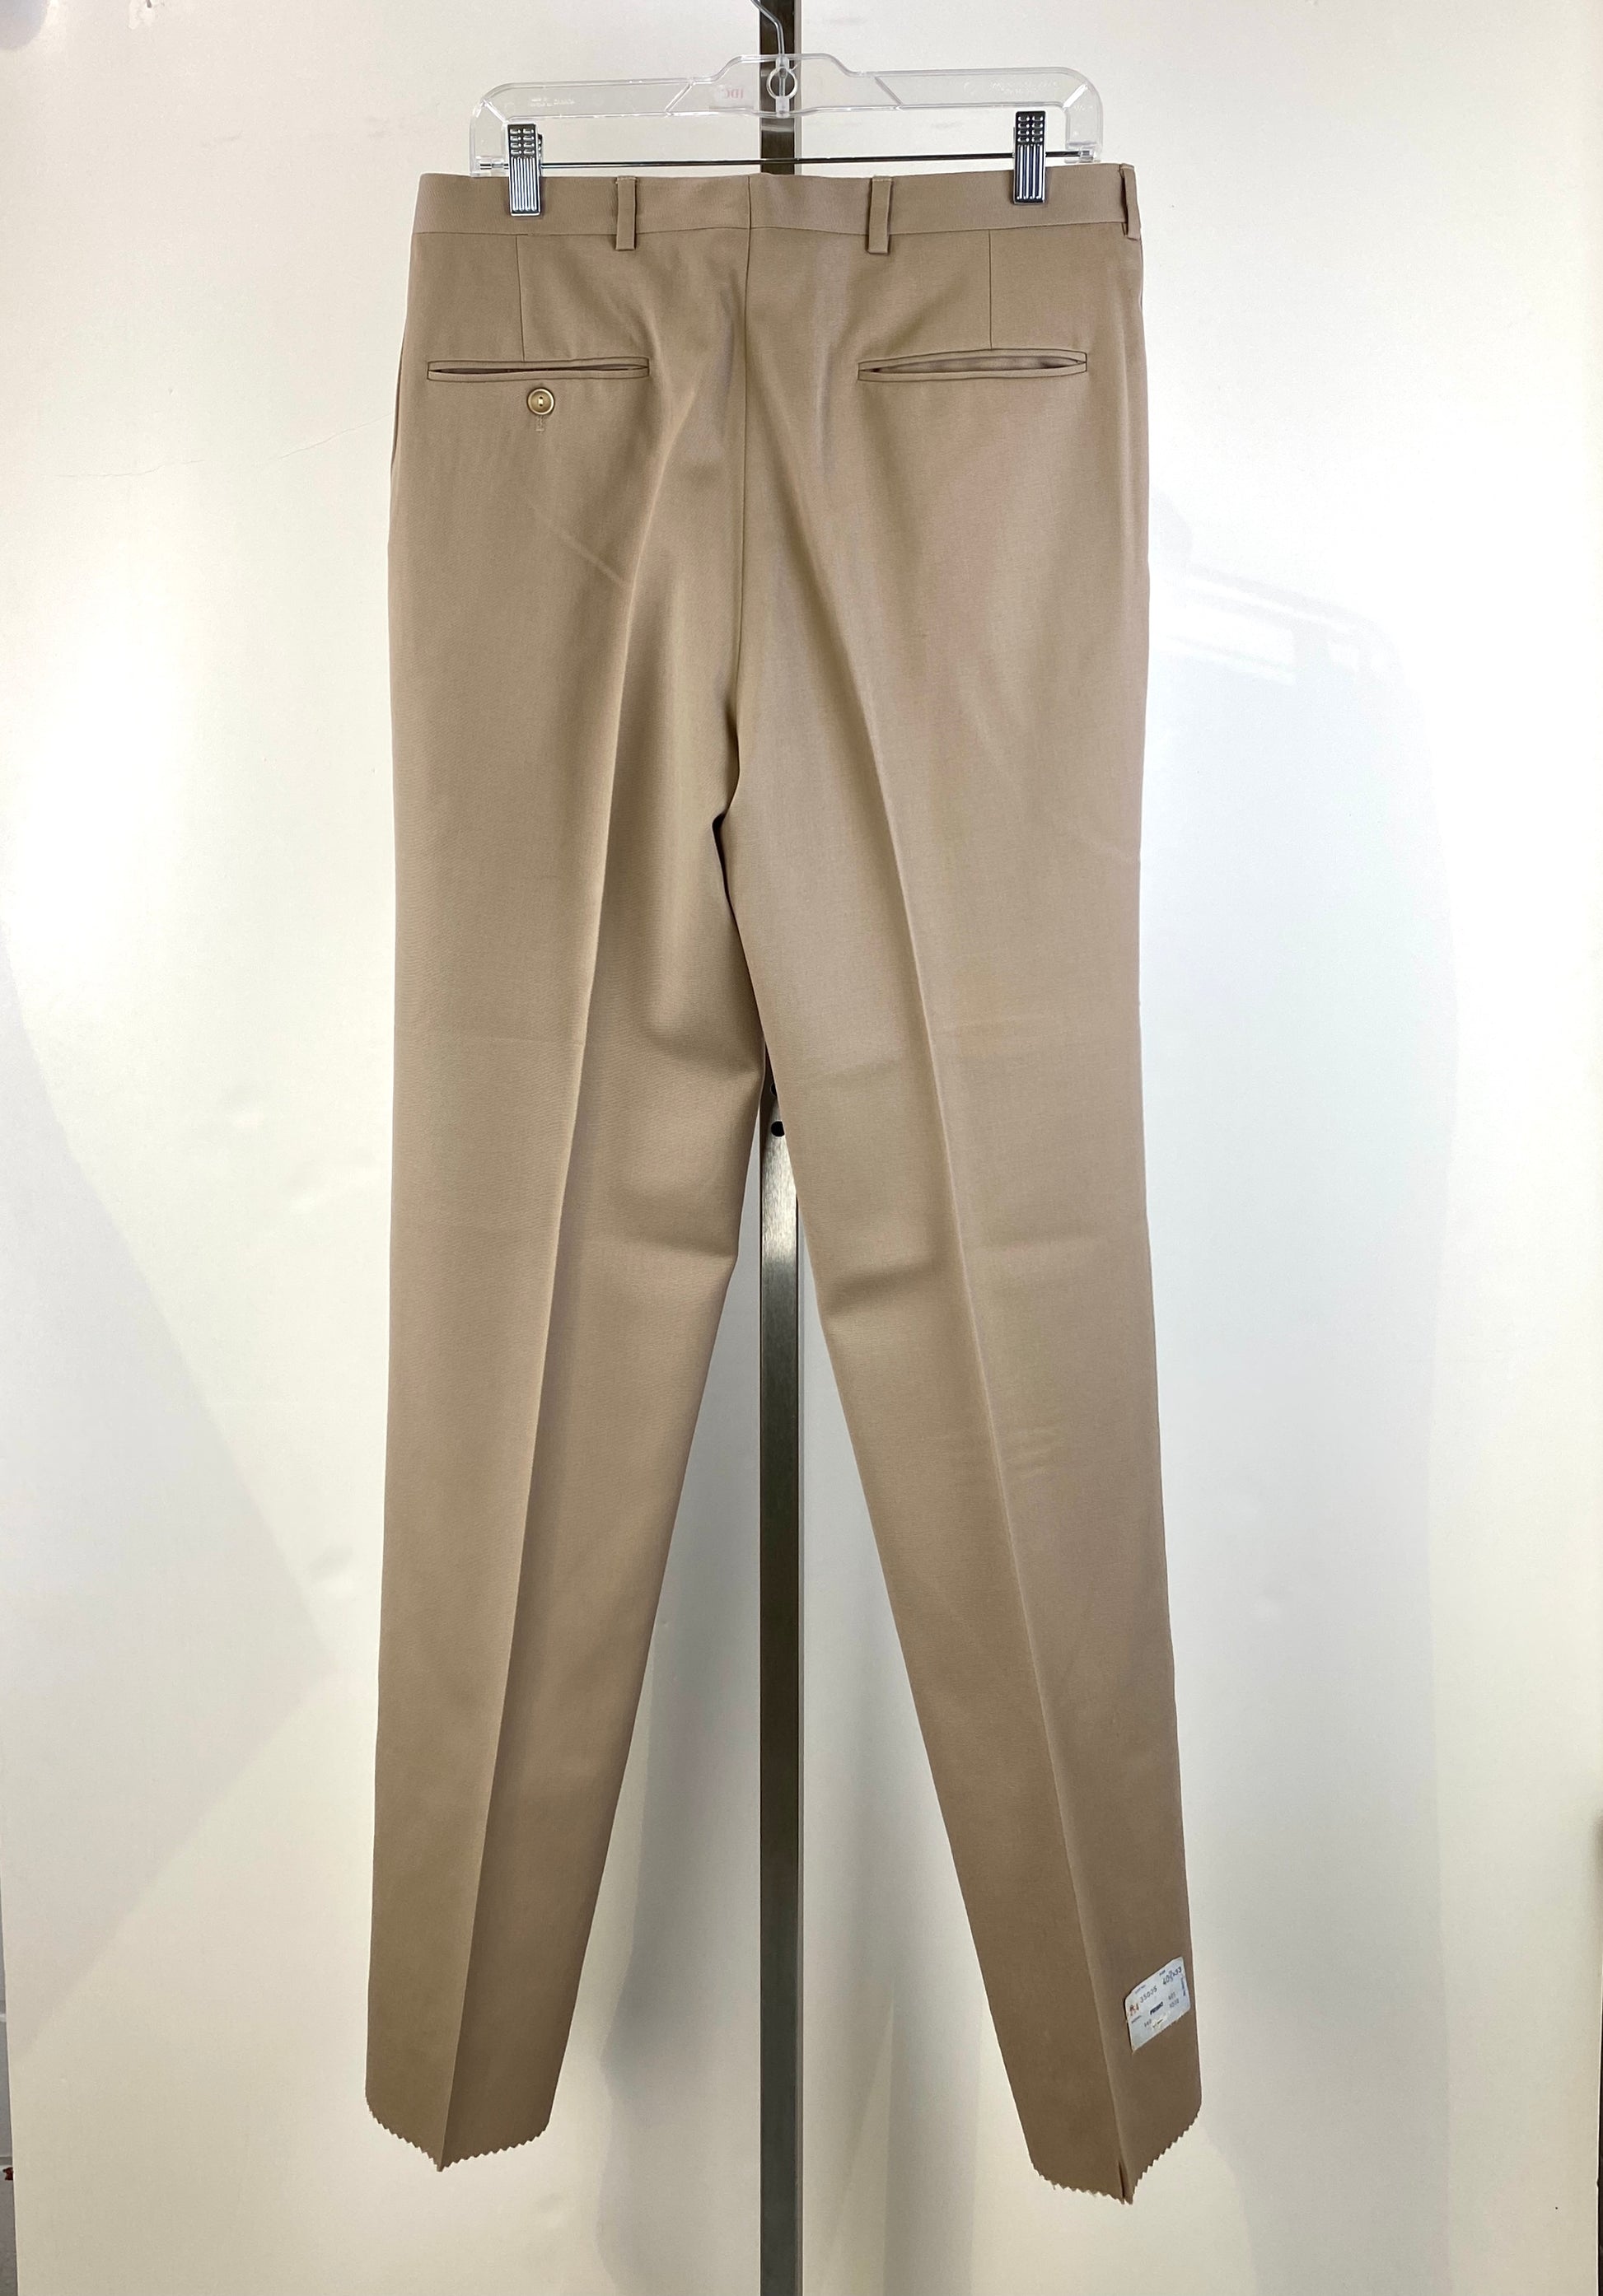 Vintage 1970s Deadstock Straight Wool Trousers, Men's Tan Slacks, NOS